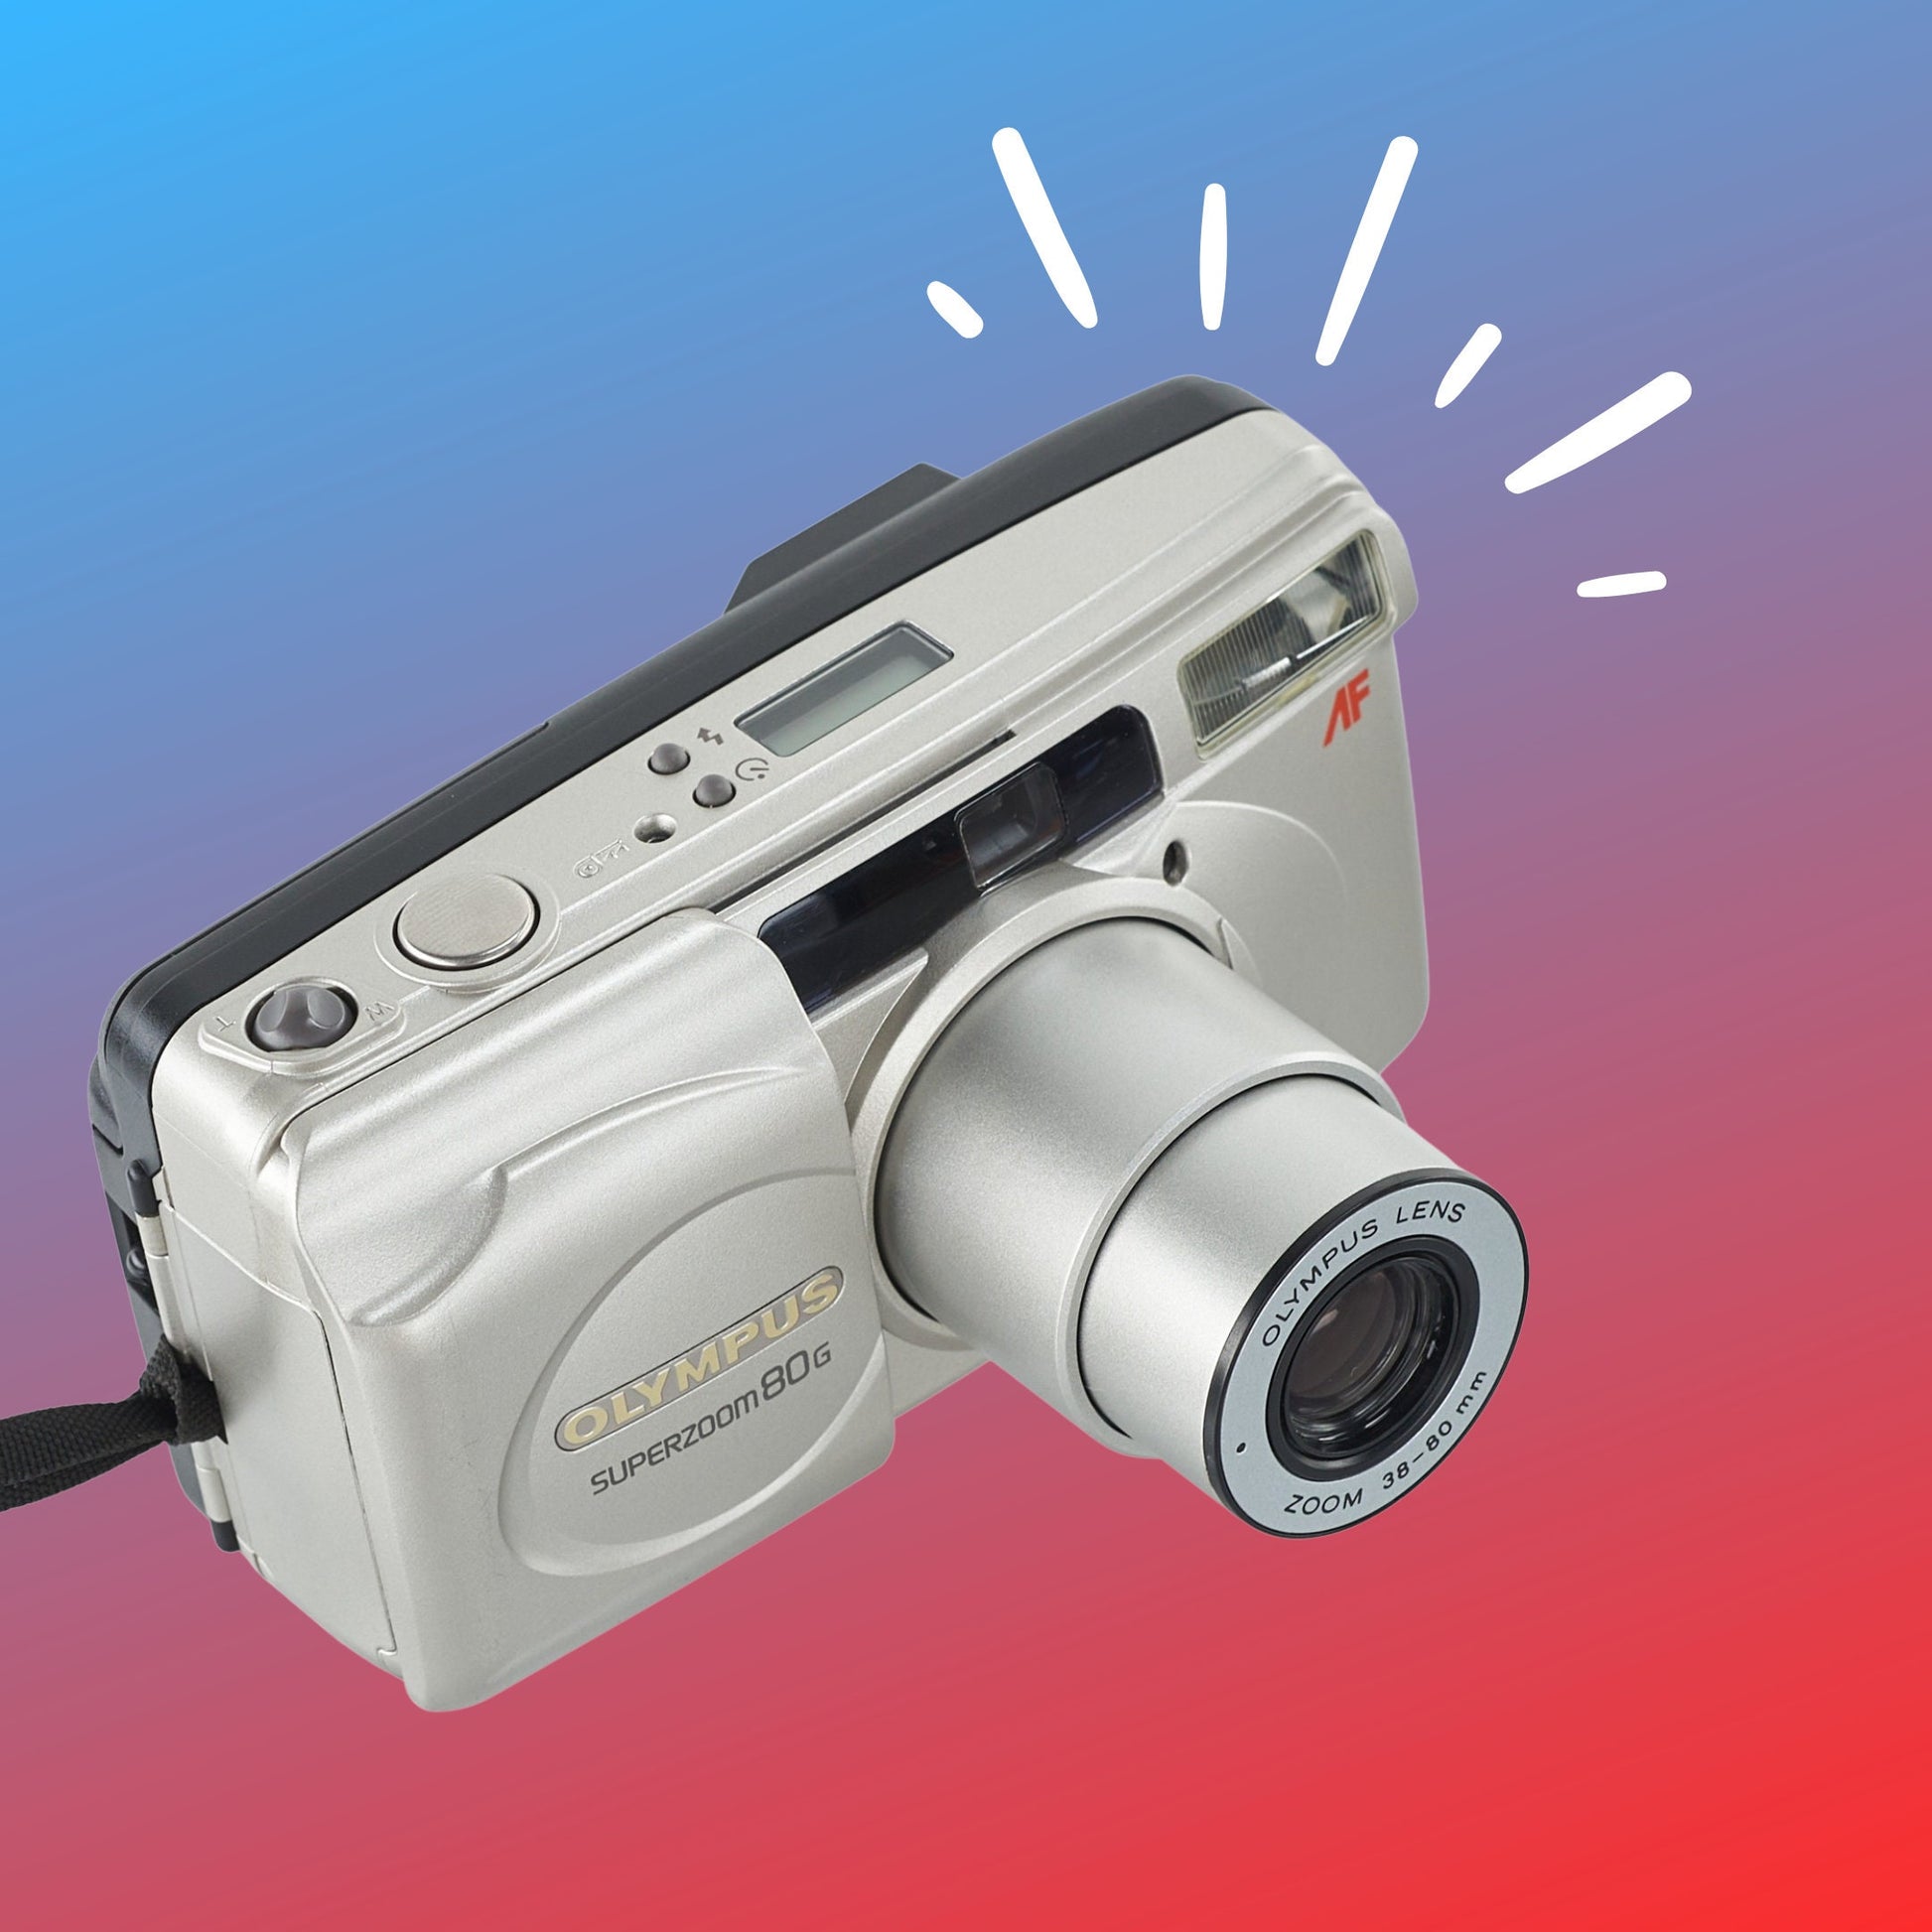 NEW ARRIVAL!! Olympus Superzoom 80G, Working Film Camera, Vintage Camera - Vintage Polaroid Instant Cameras